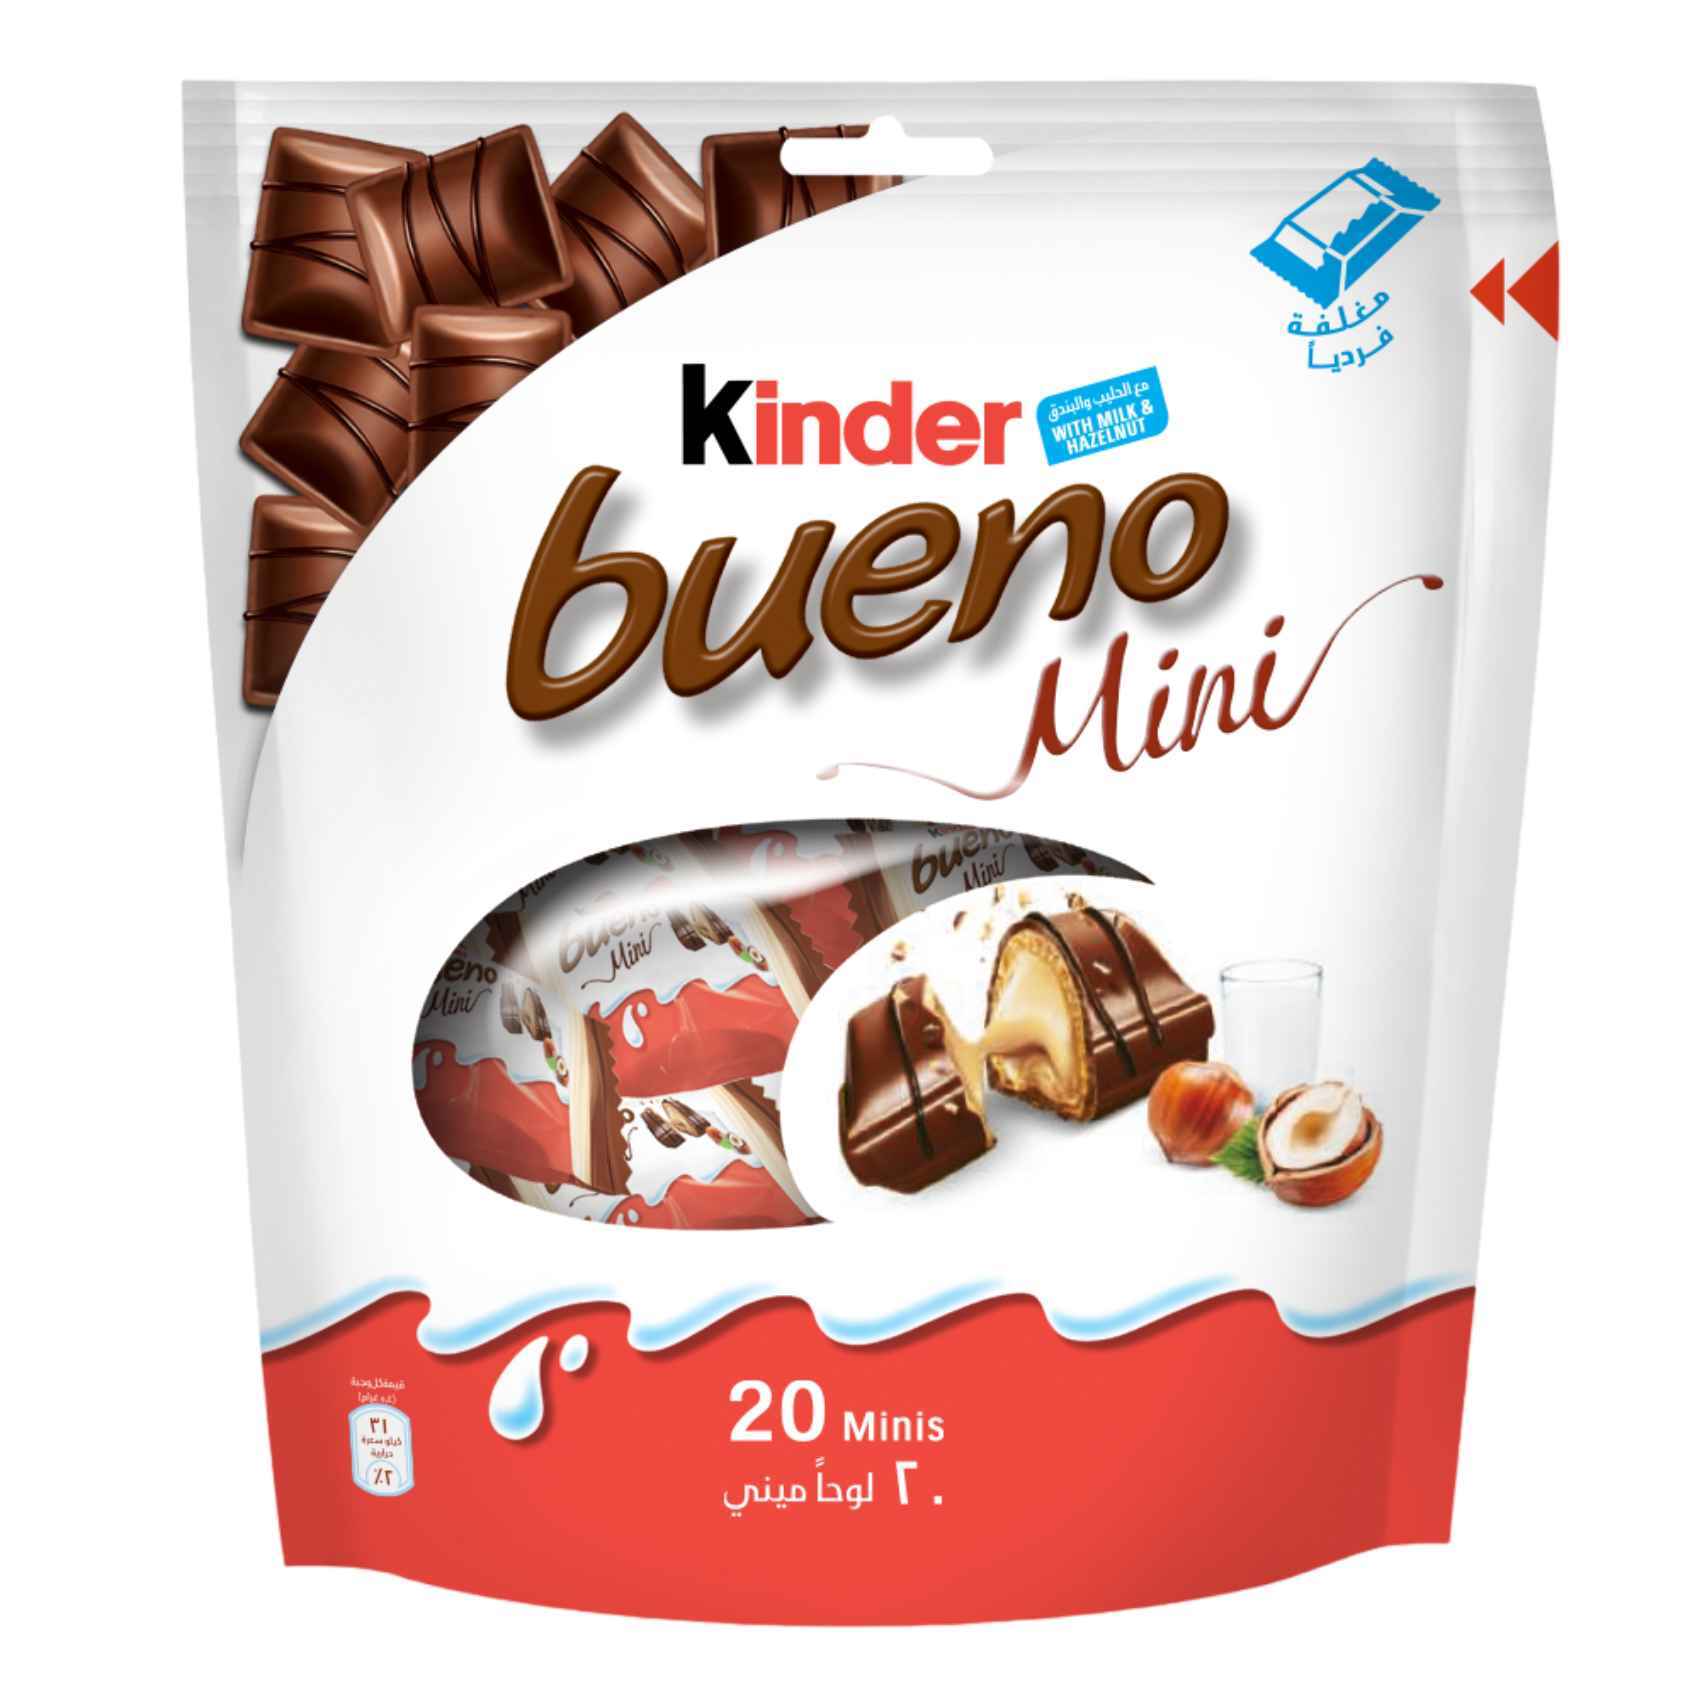 Buy Kinder Bueno Mini Milk Chocolate Bars in Wafer with Hazelnut